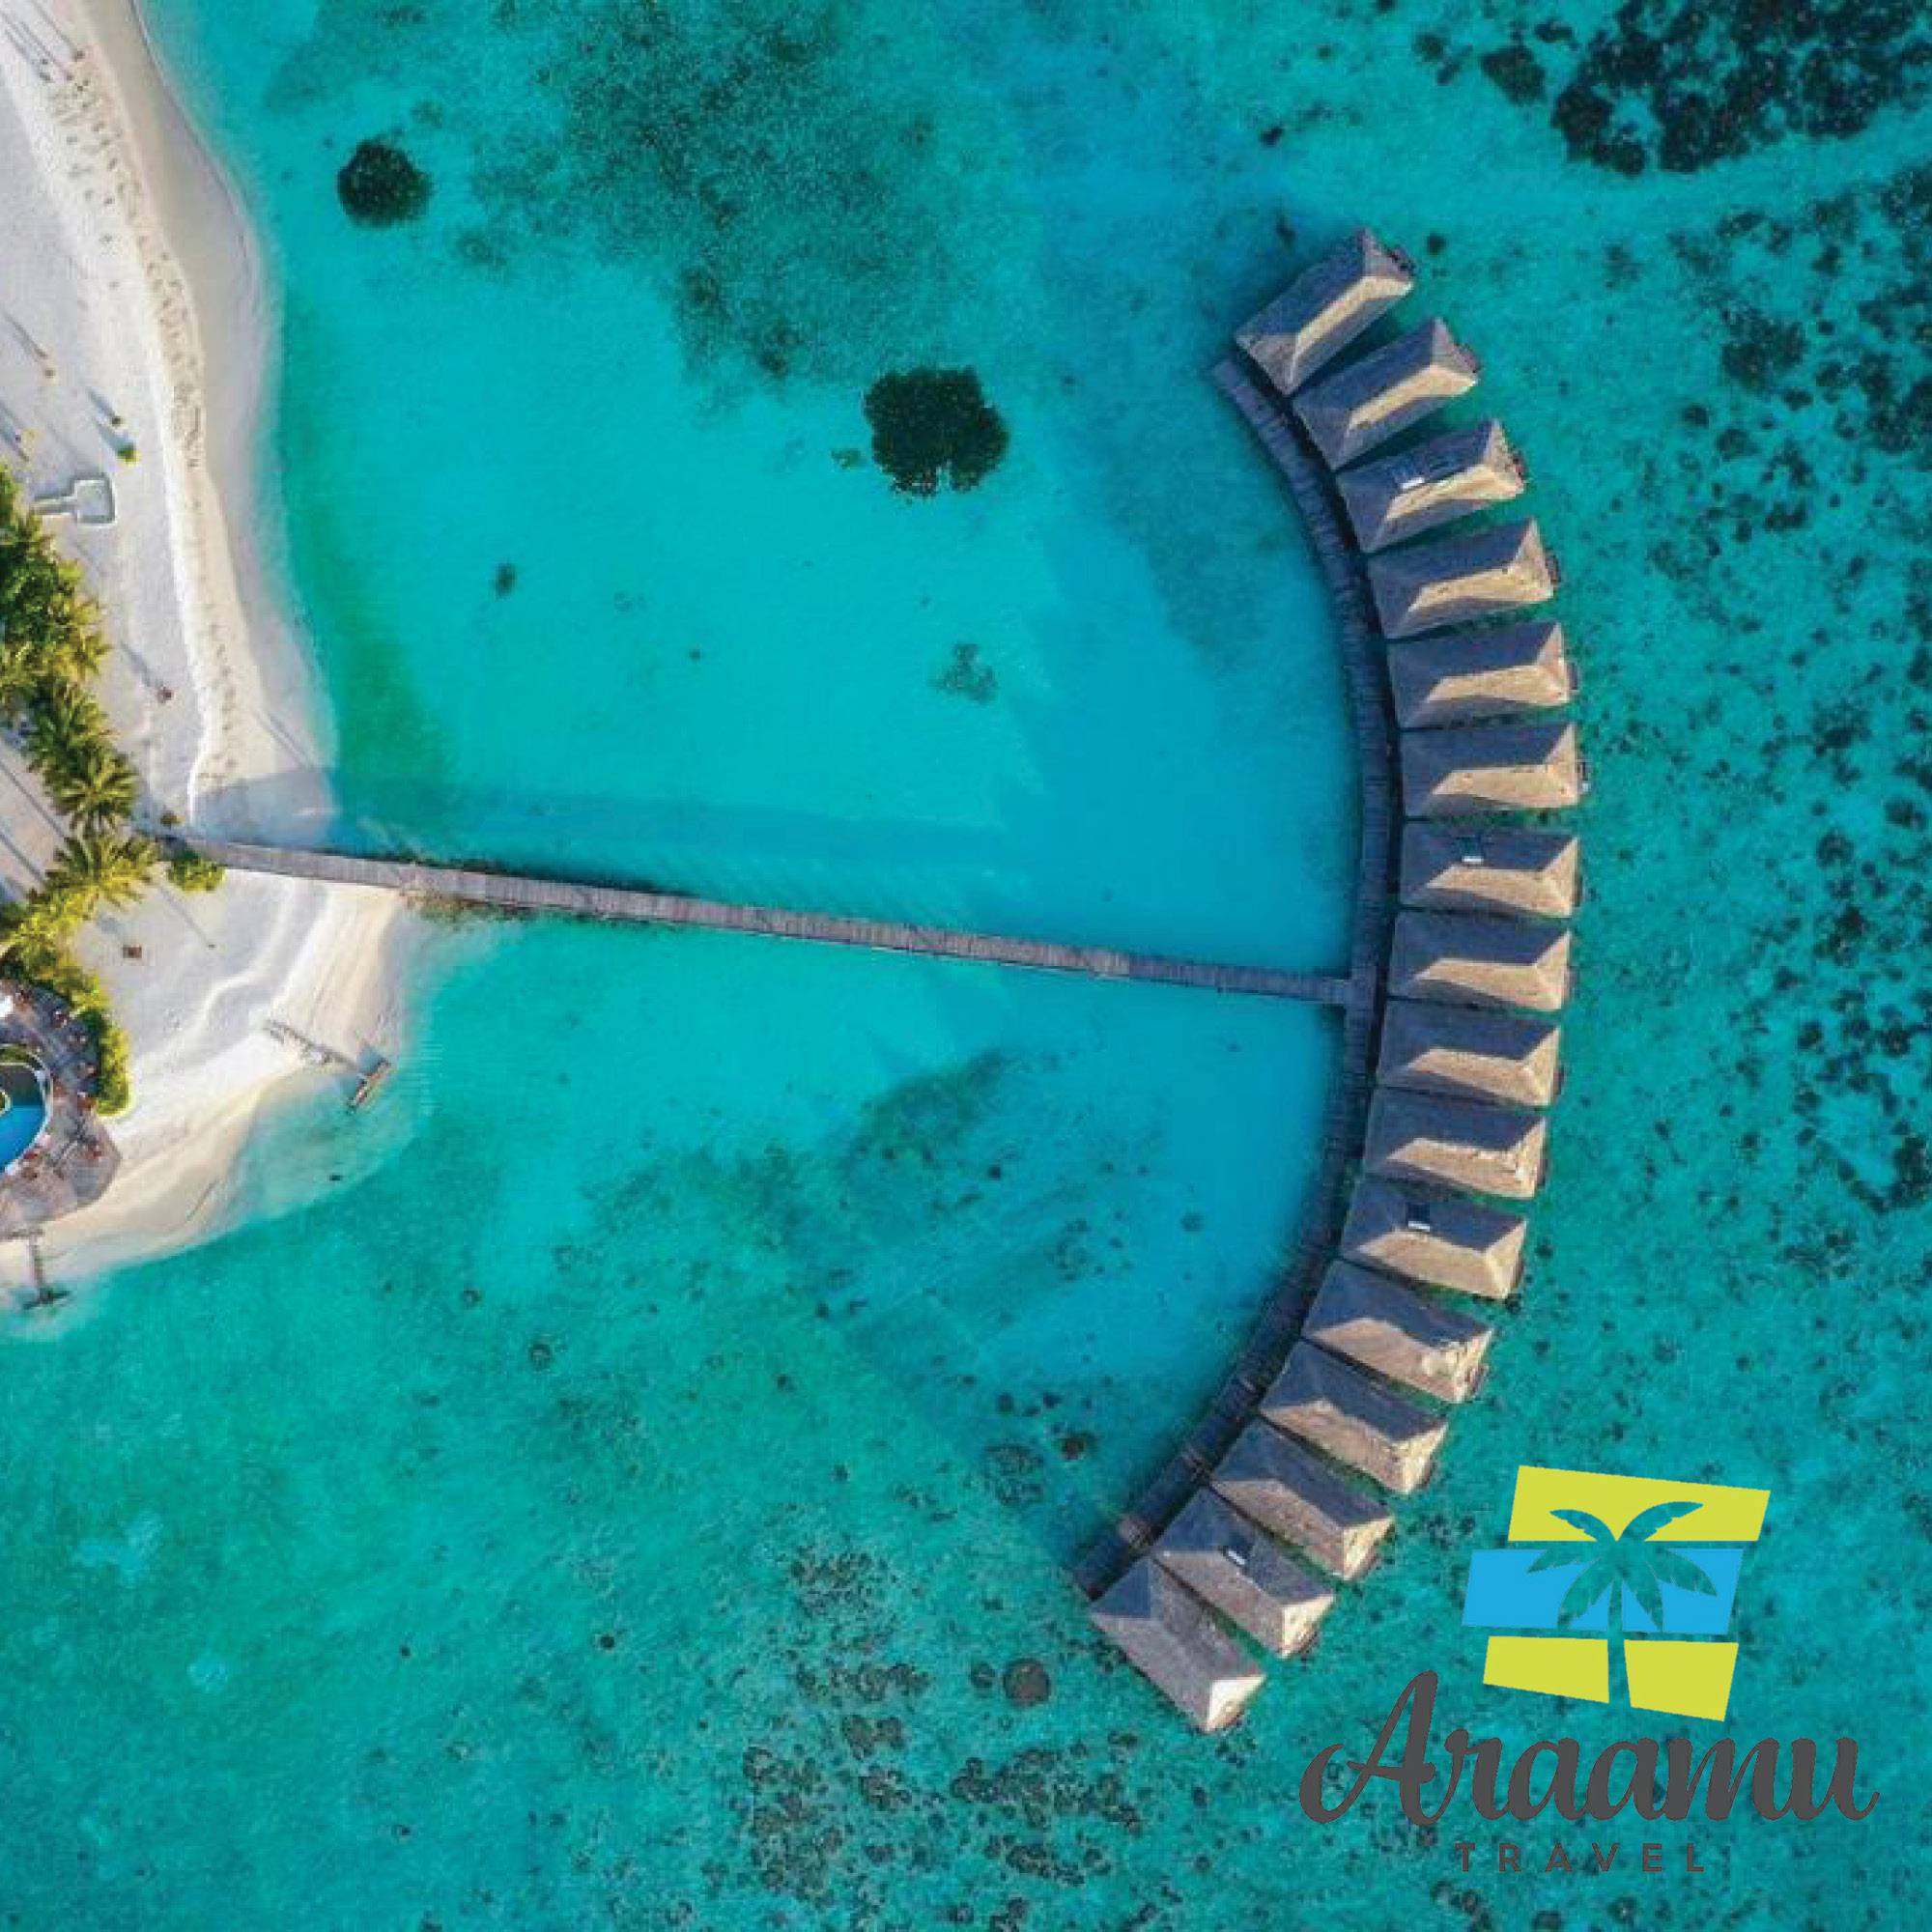 Maldív-szigetek, Filitheyo Island Resort****